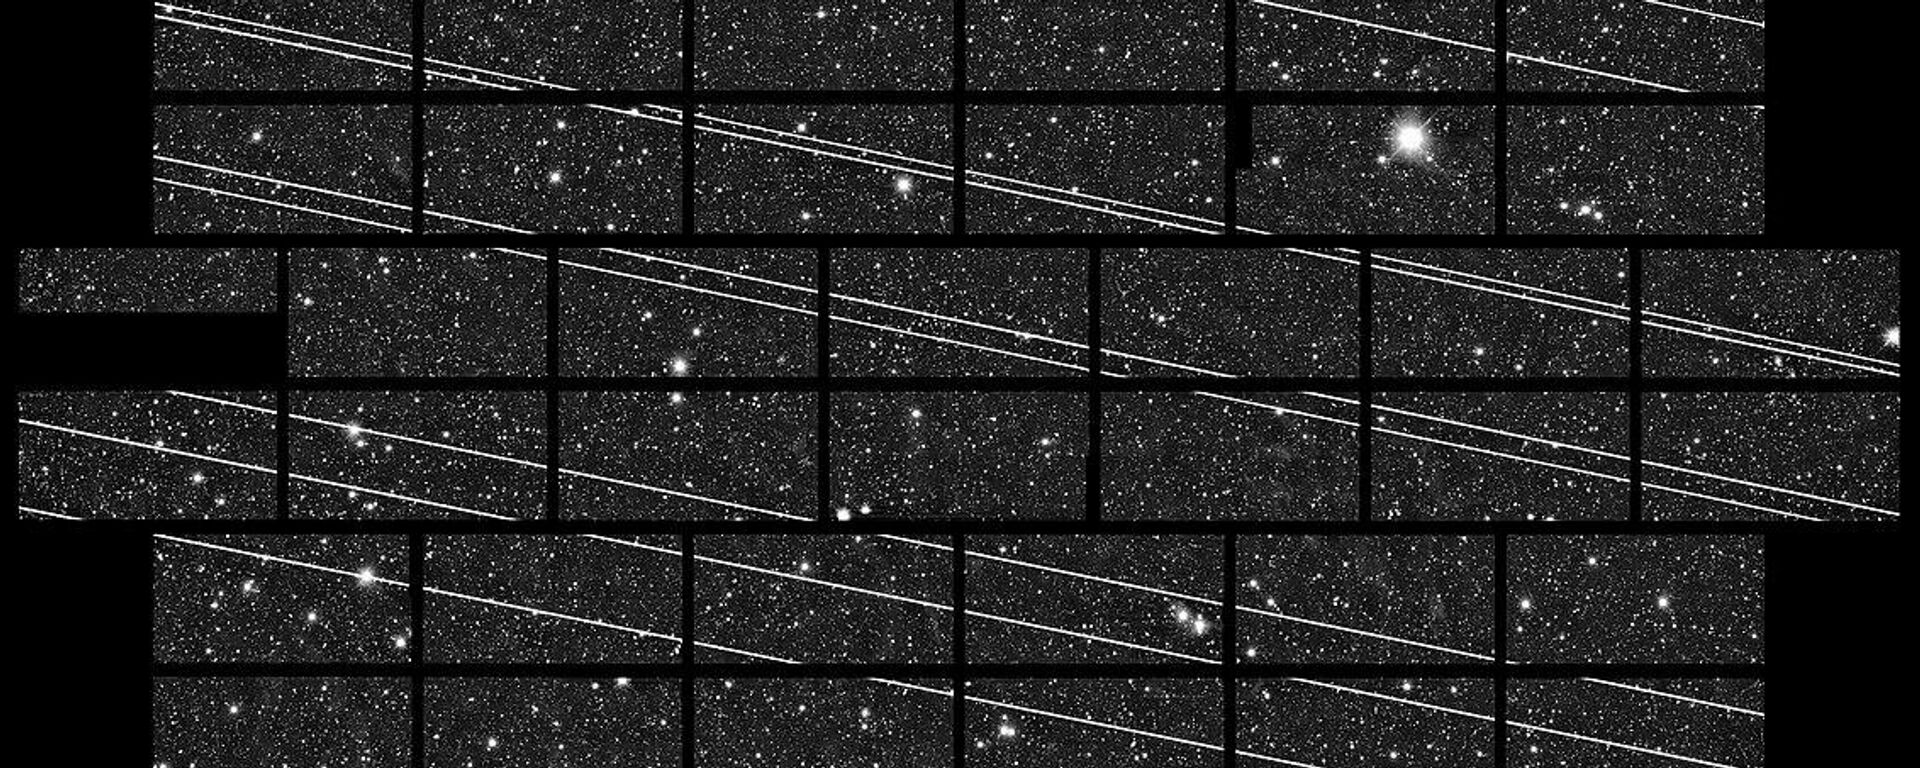 Starlink Satellites Imaged from CTIO - Sputnik International, 1920, 08.10.2021